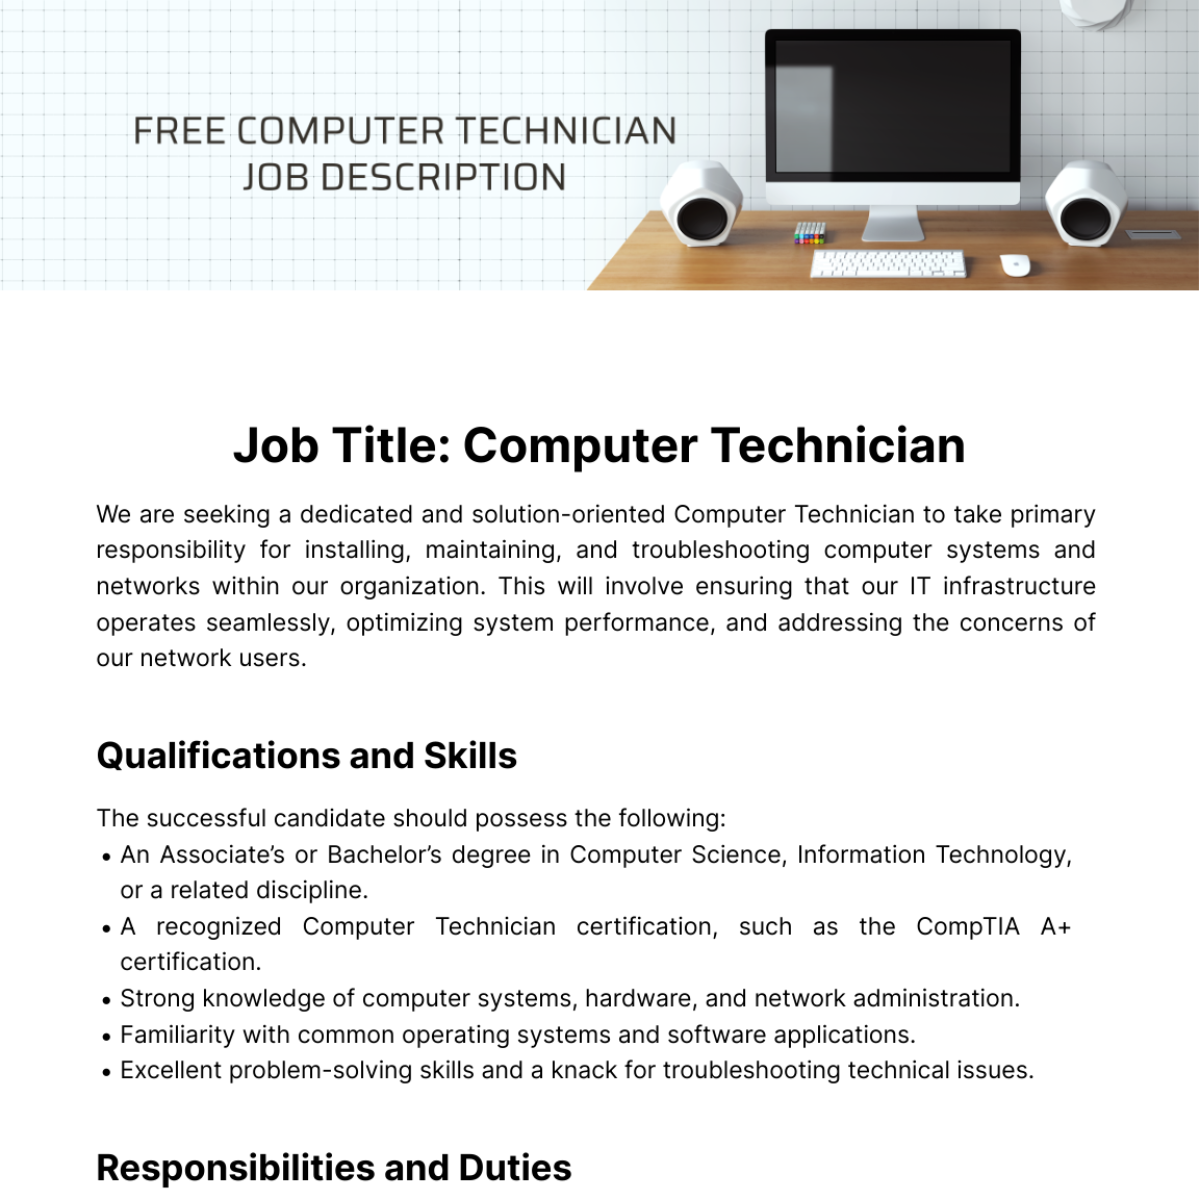 Free Computer Technician Job Description Template